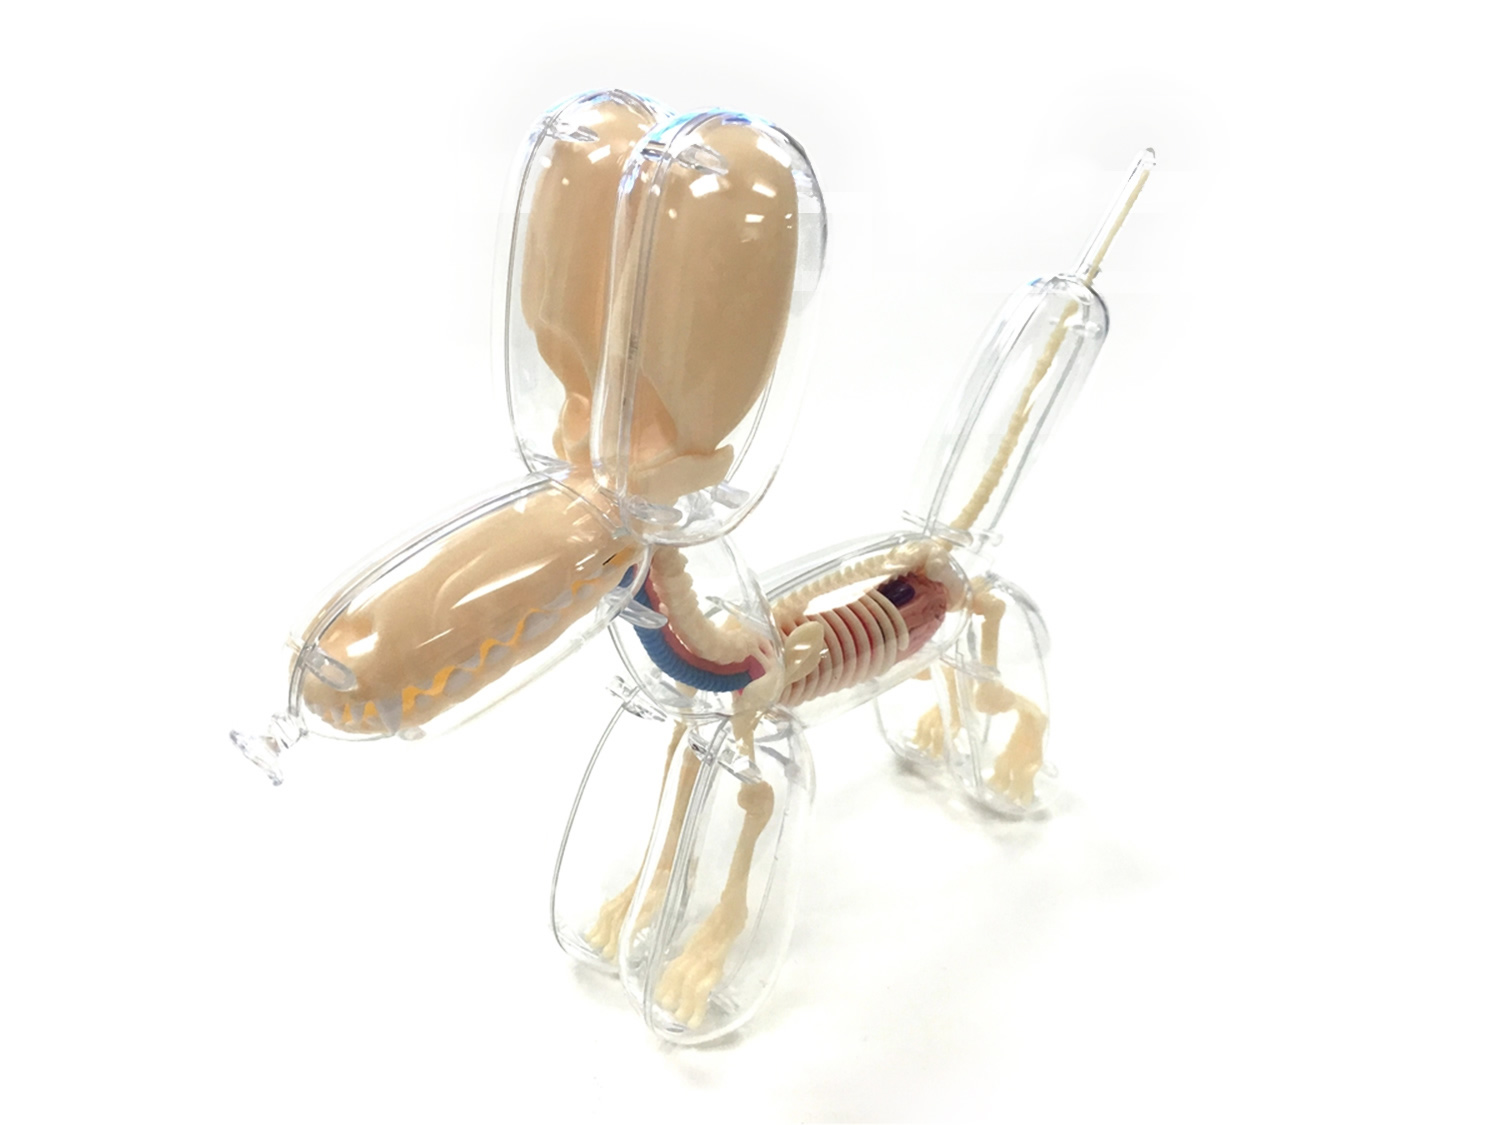 Anatomical Balloon Dog Model by jason freeny